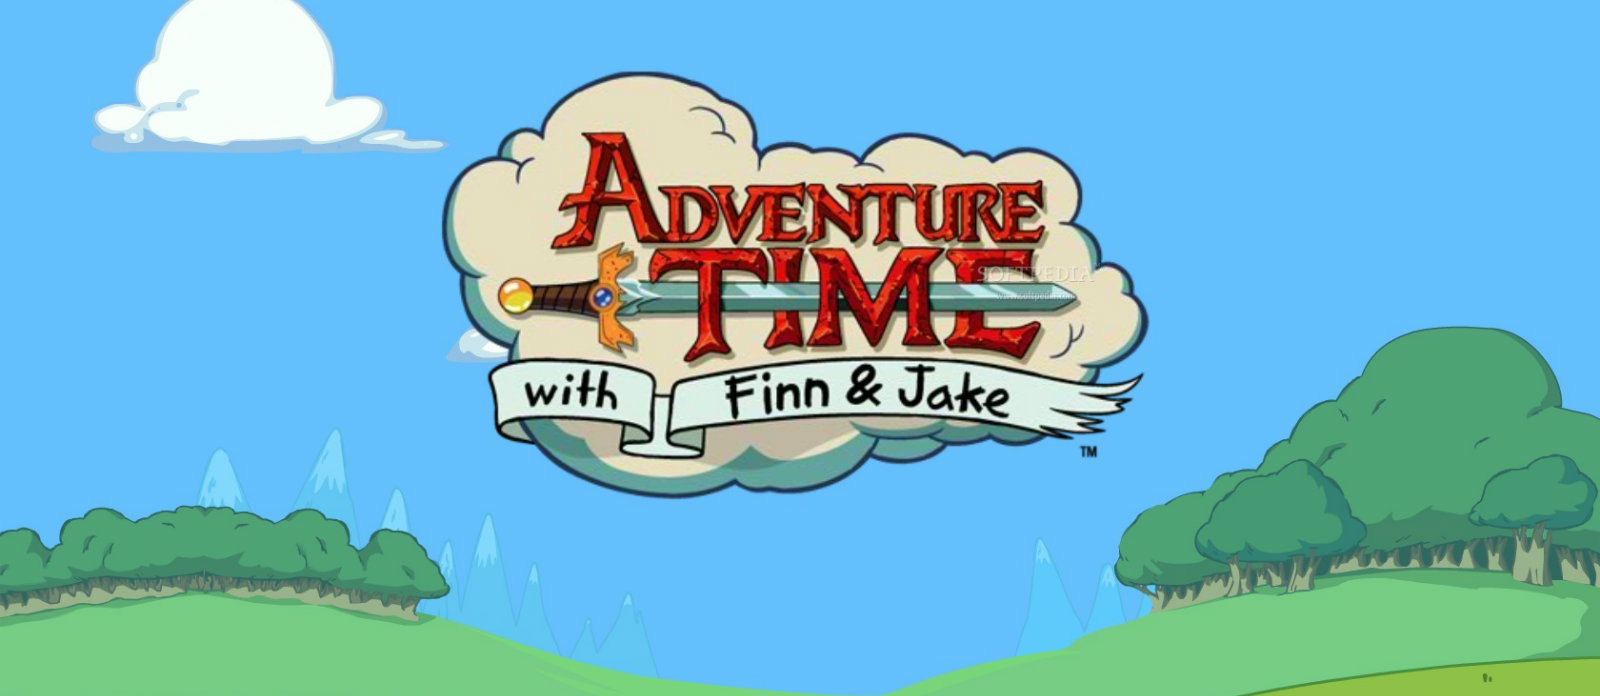 1adventure Time Adventure Wallpaper Wide Jpg